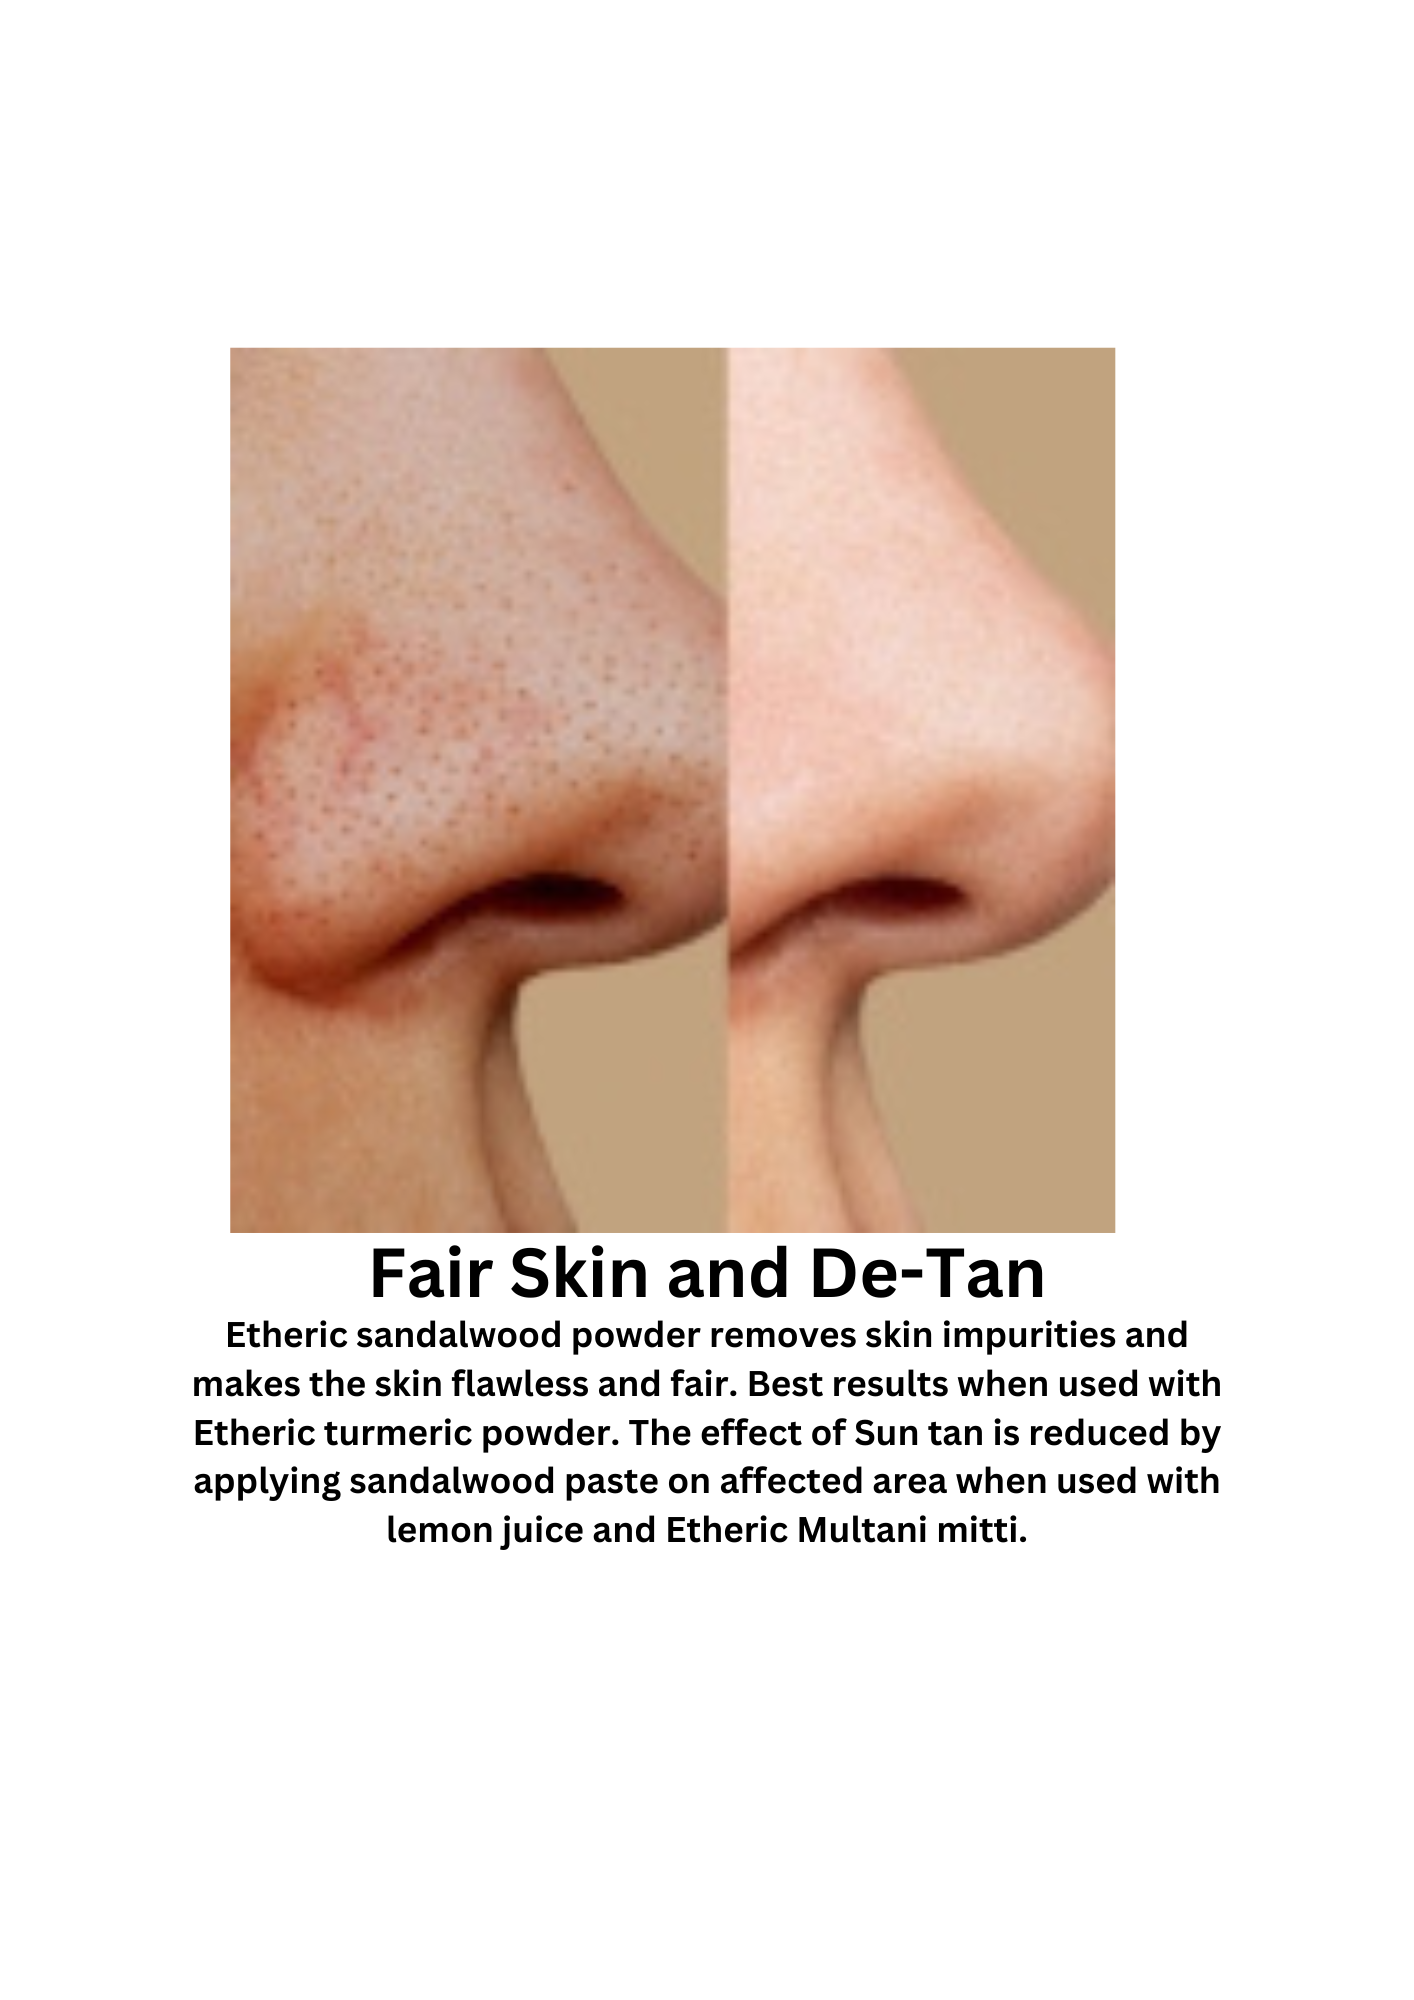 Otanics Turmeric Sandalwood Tan Removal Face Pack for Glowing Skin